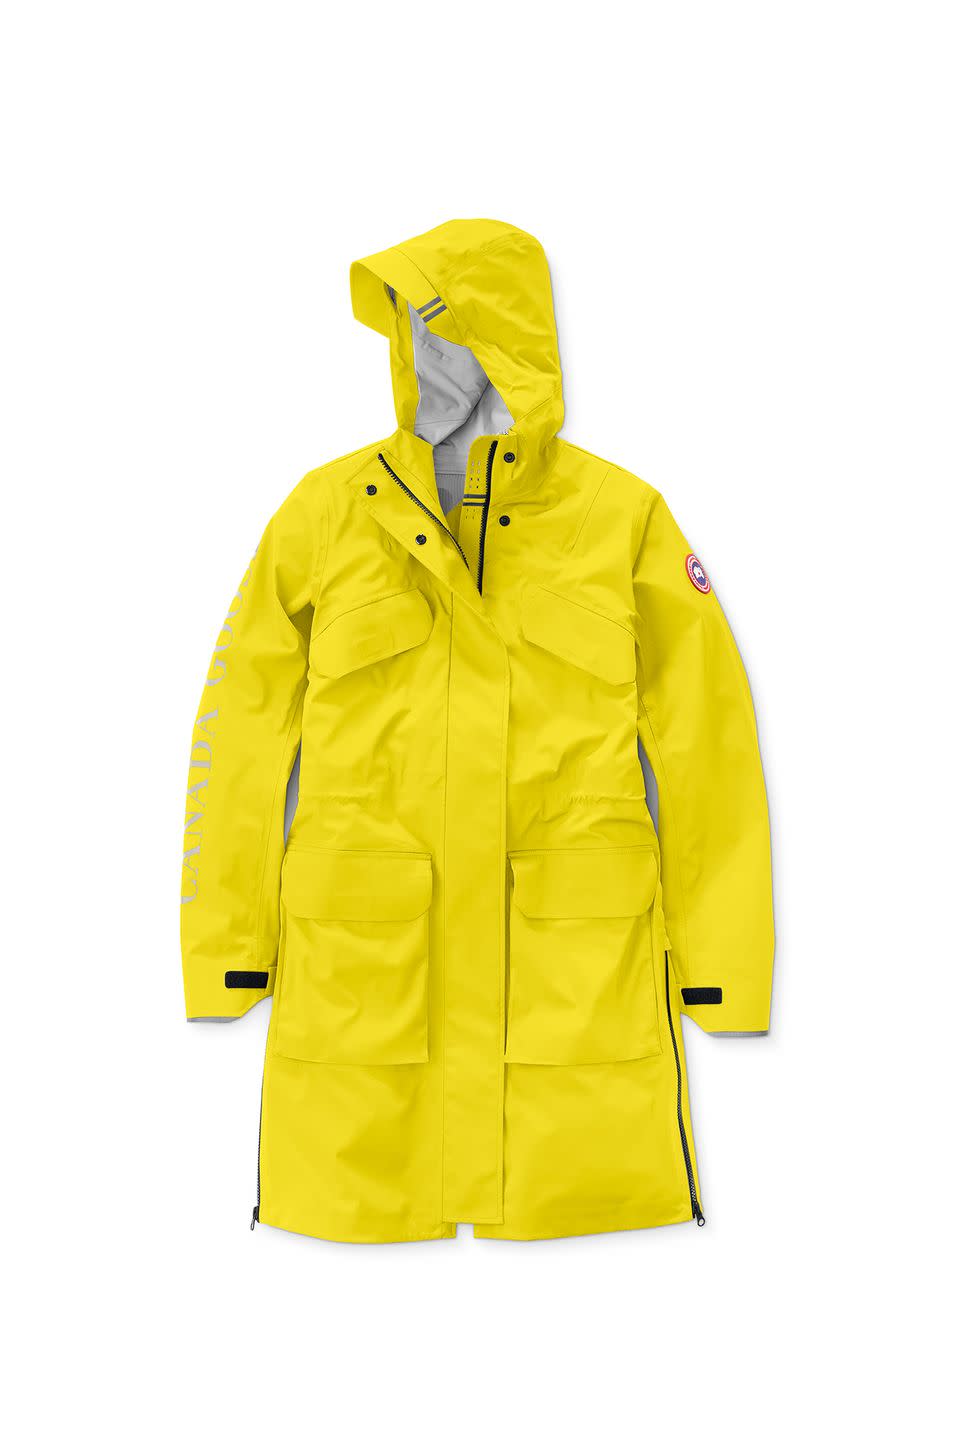 Canada Goose yellow rain coat